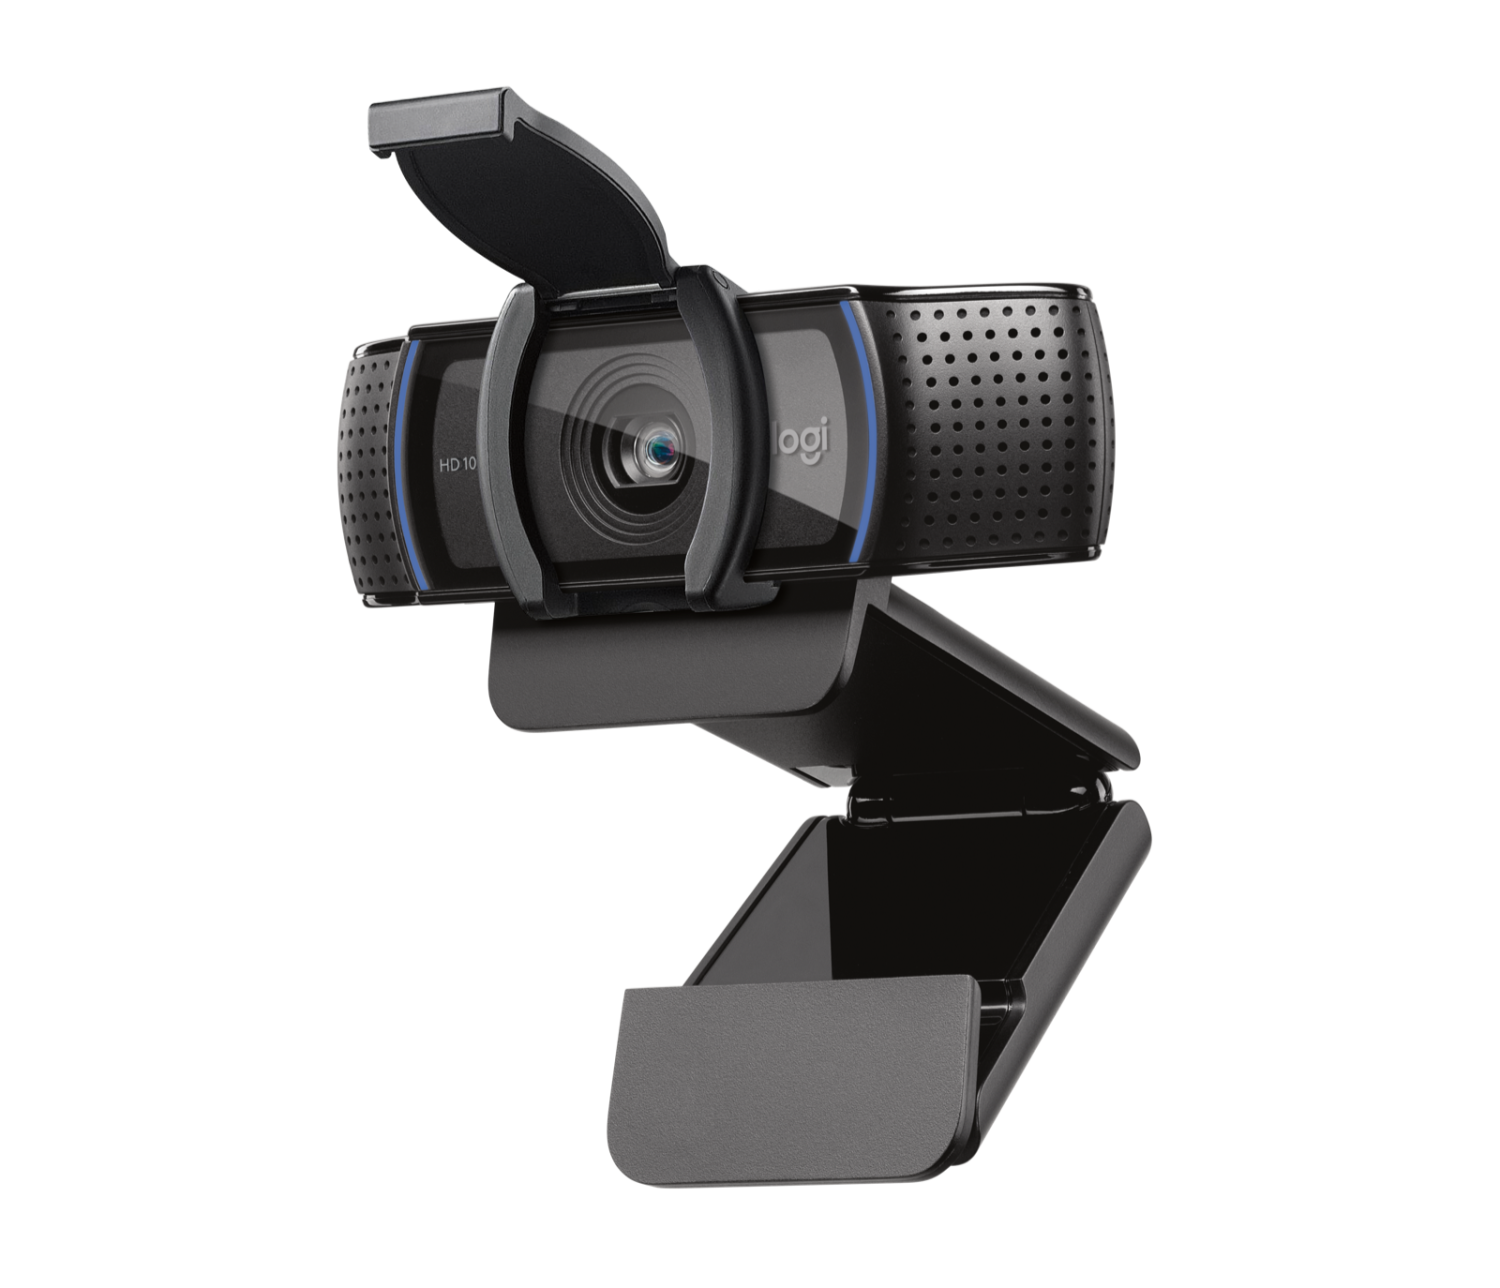 Web Cam Logitech C920s PRO Full HD